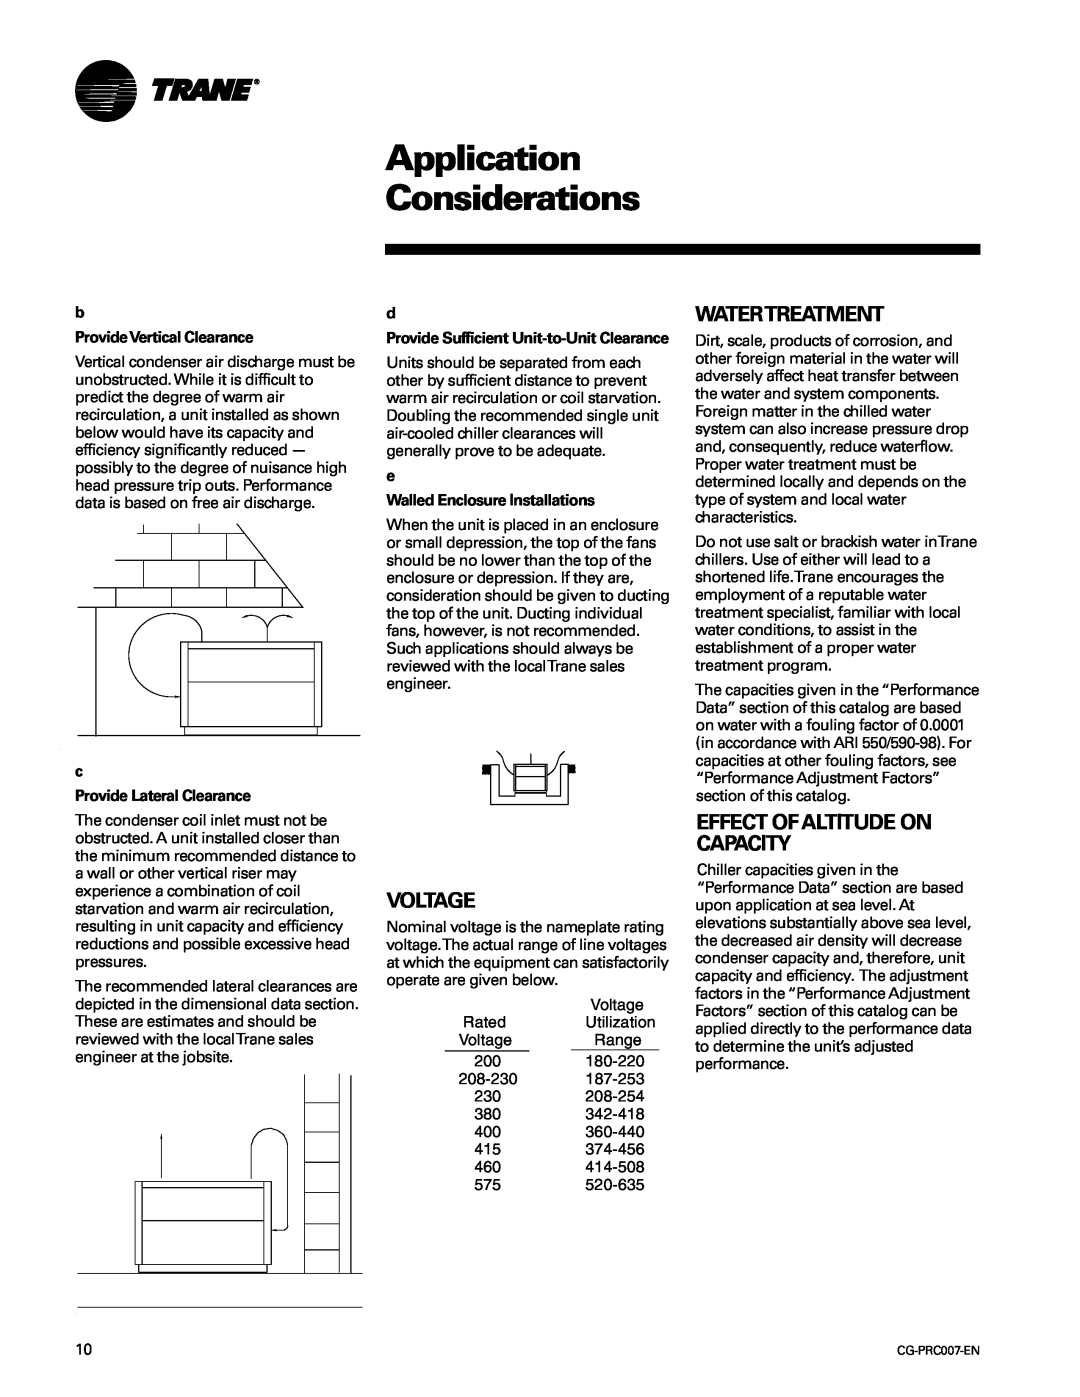 Trane CG-PRC007-EN manual Application Considerations, Voltage, Watertreatment, Effect Ofaltitude On Capacity 